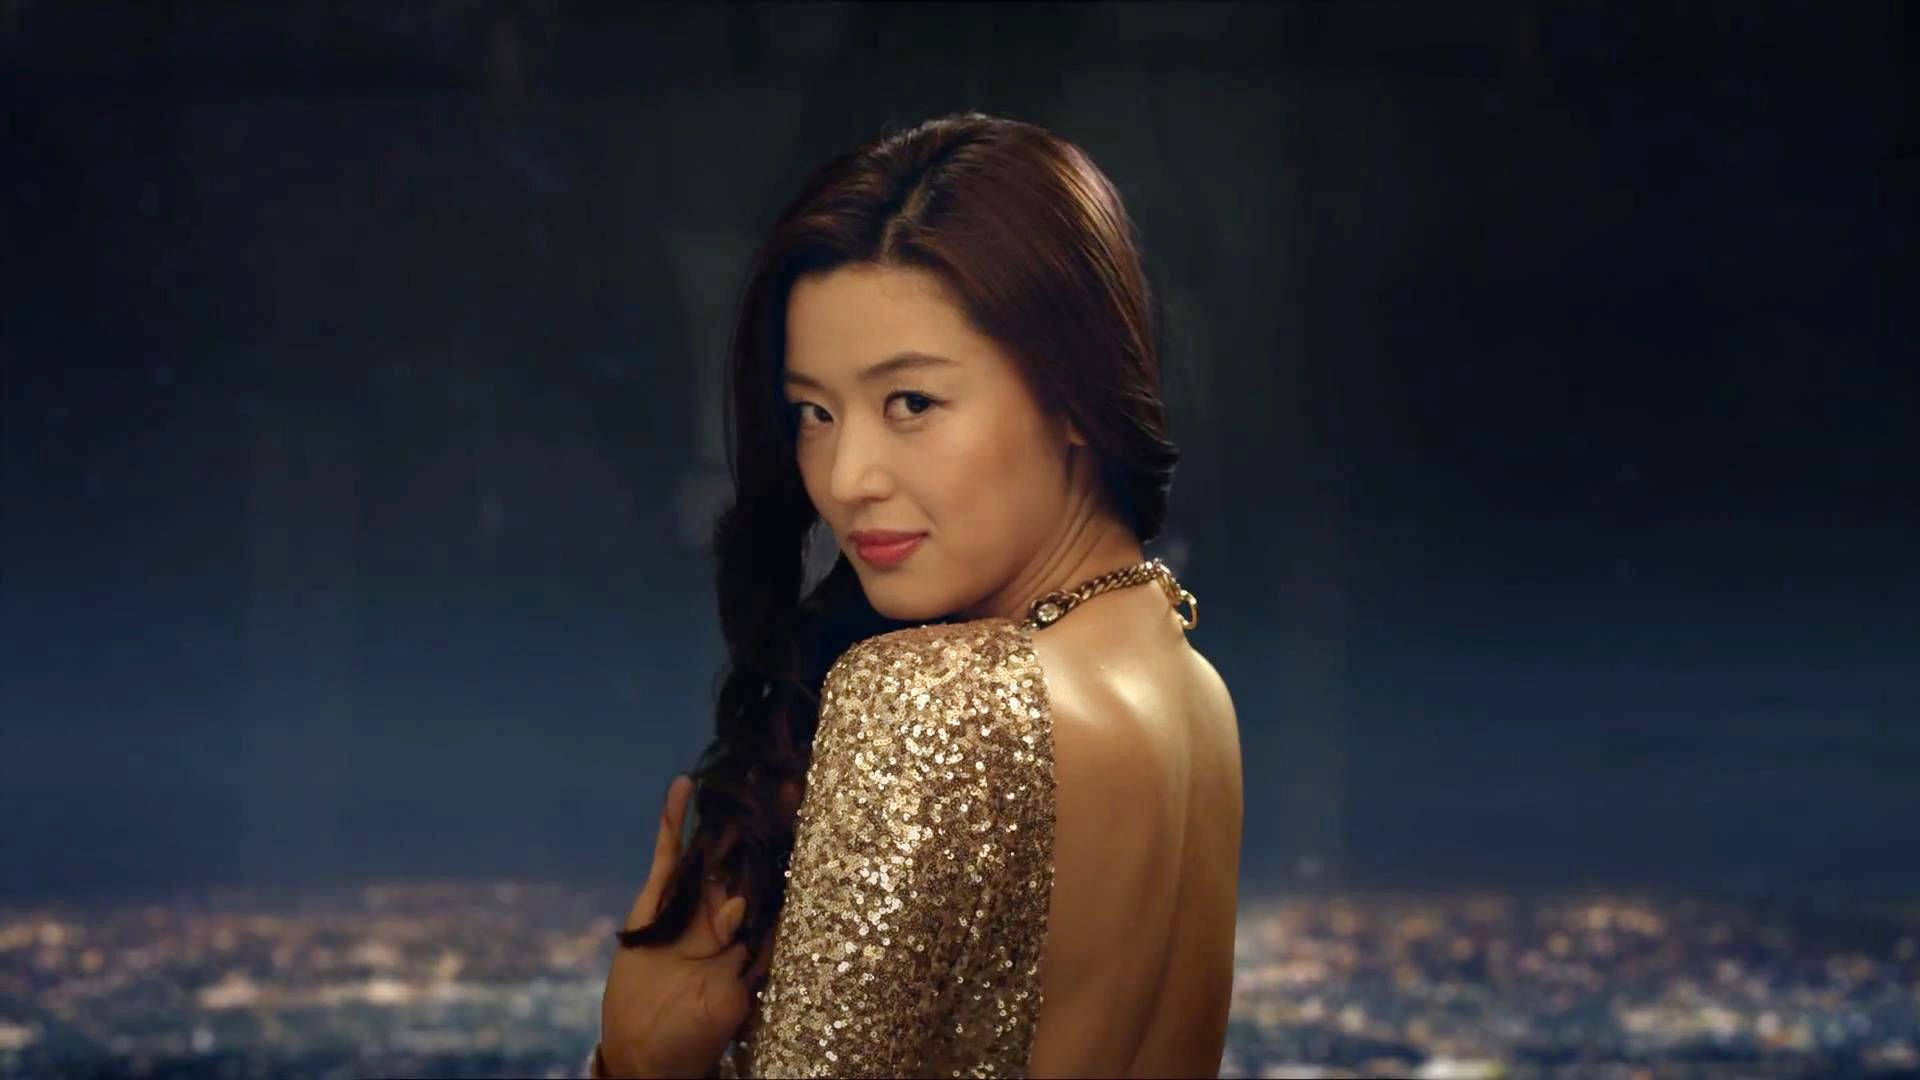 Jun Ji Hyun In Glamorous Gown Background